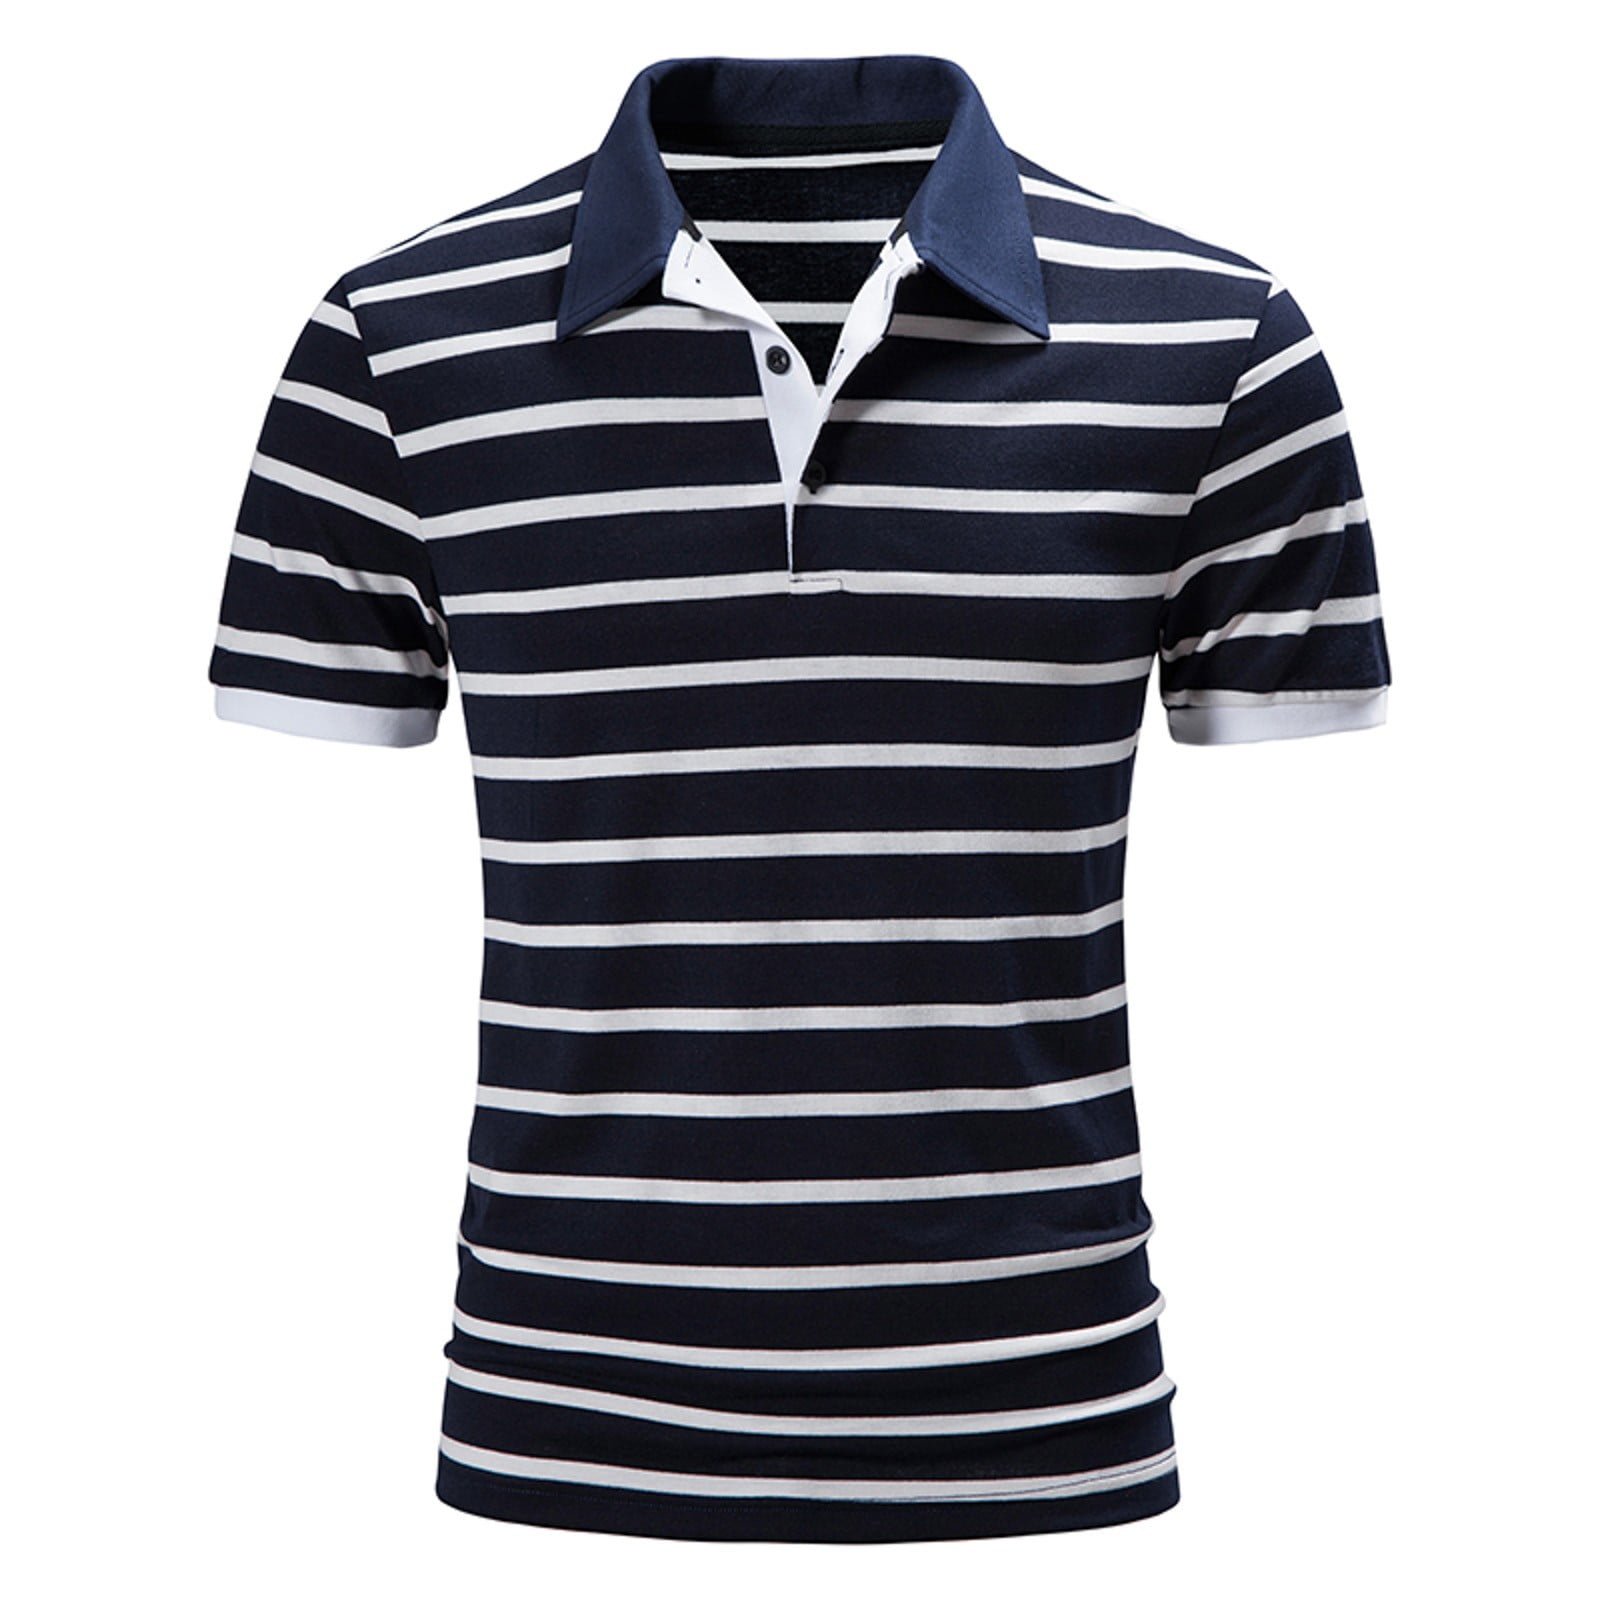 Pedort Mens T Shirt Golf Shirts for Men Regular and Big and Tall Size ...